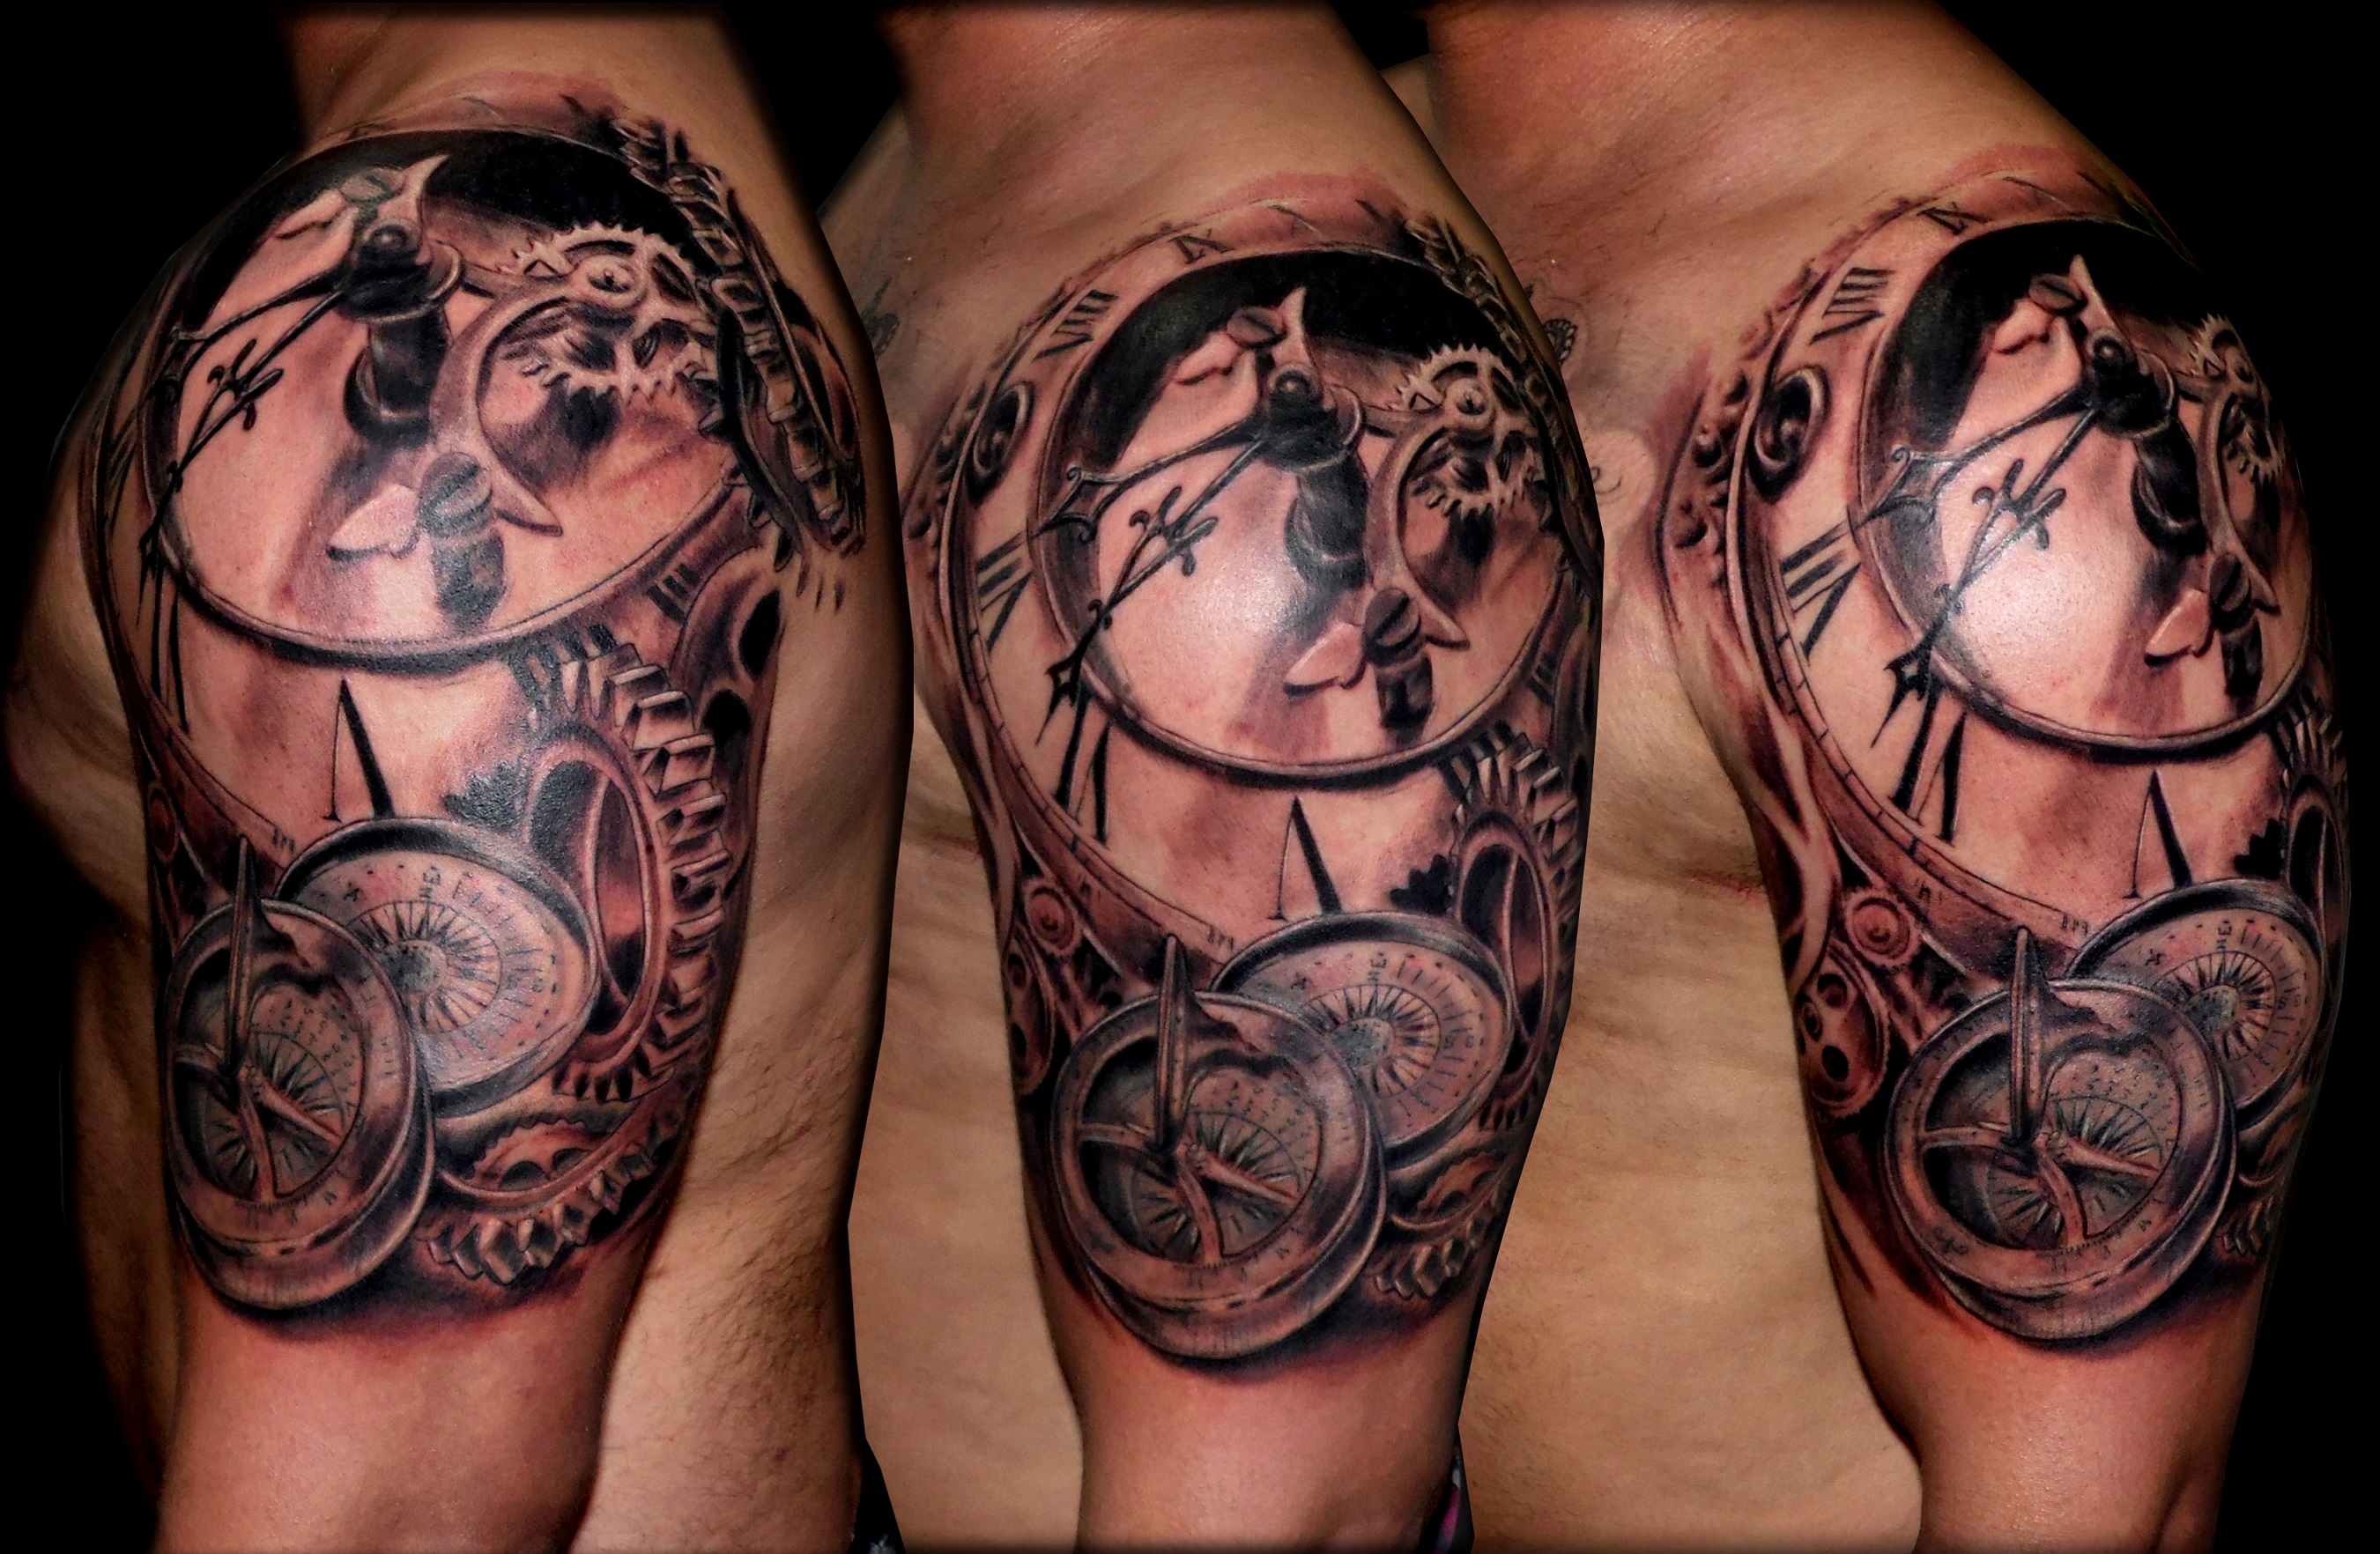 reloj primer plano tattoo tatuaje realista trecedepicas 13depicas hombro brazo blanco negro engranajes brujula